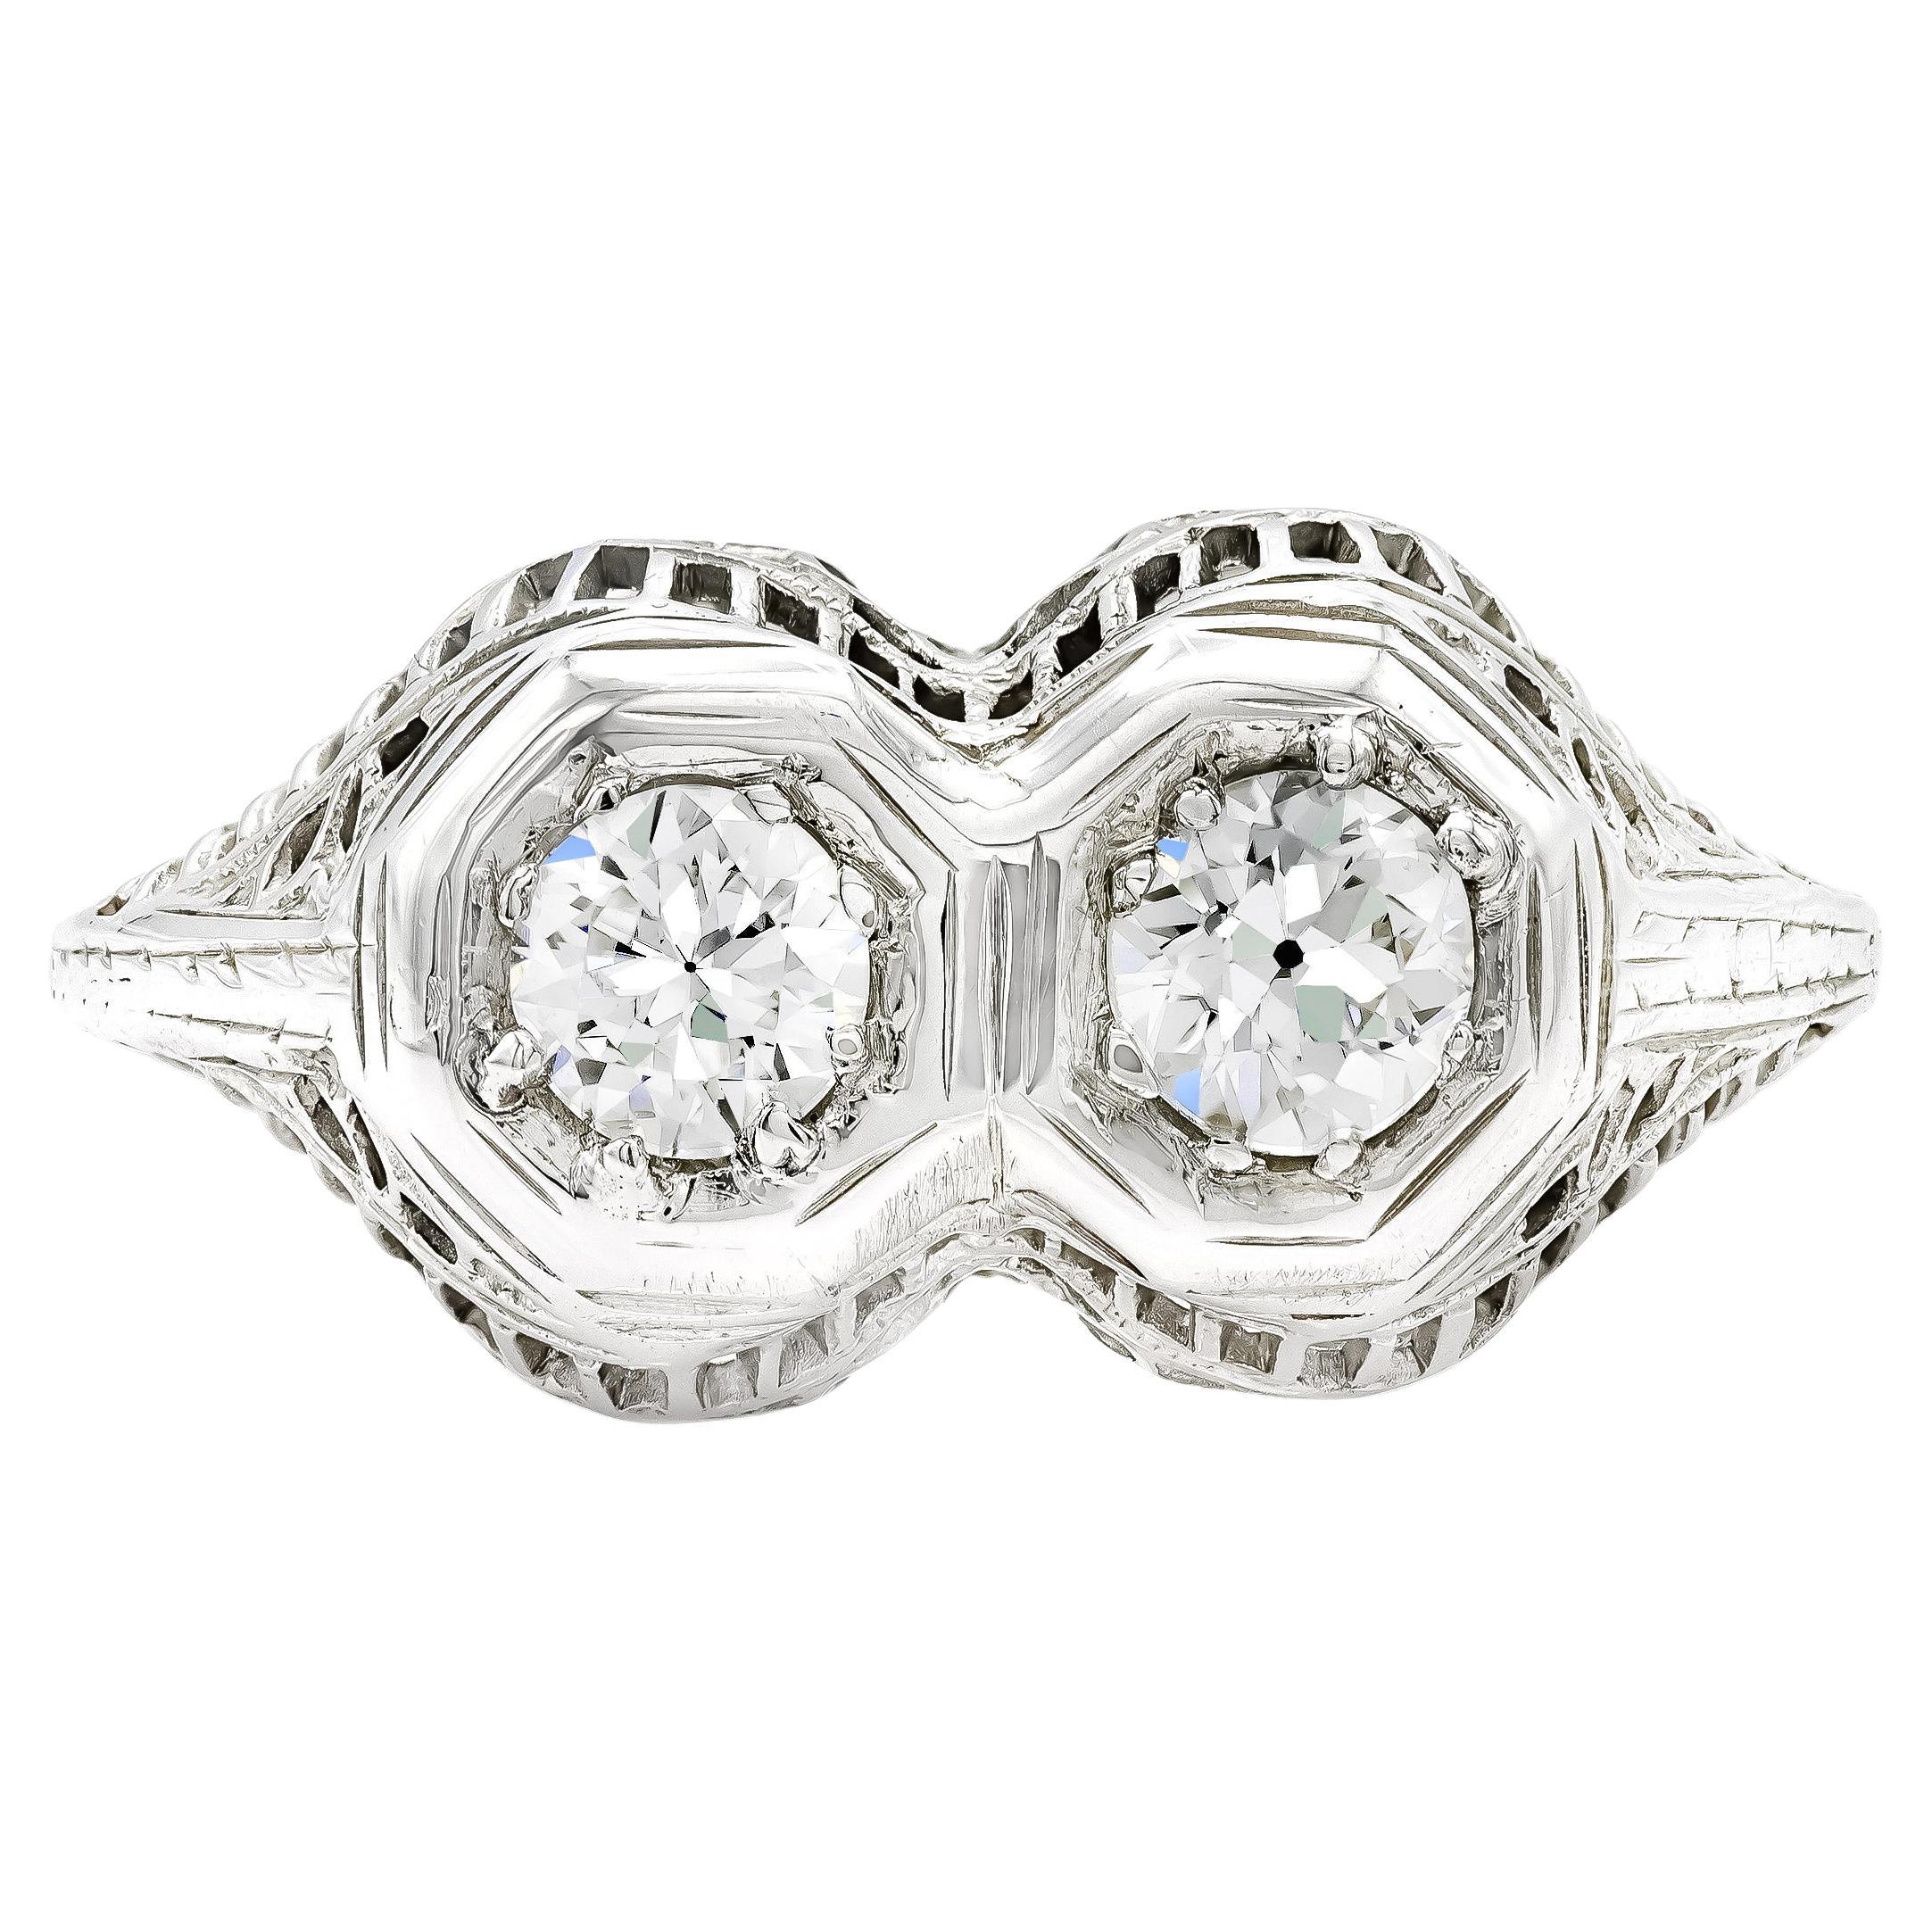 Edwardian 0.70 Ct. Diamond Toi et Moi Setting Ring in Platinum